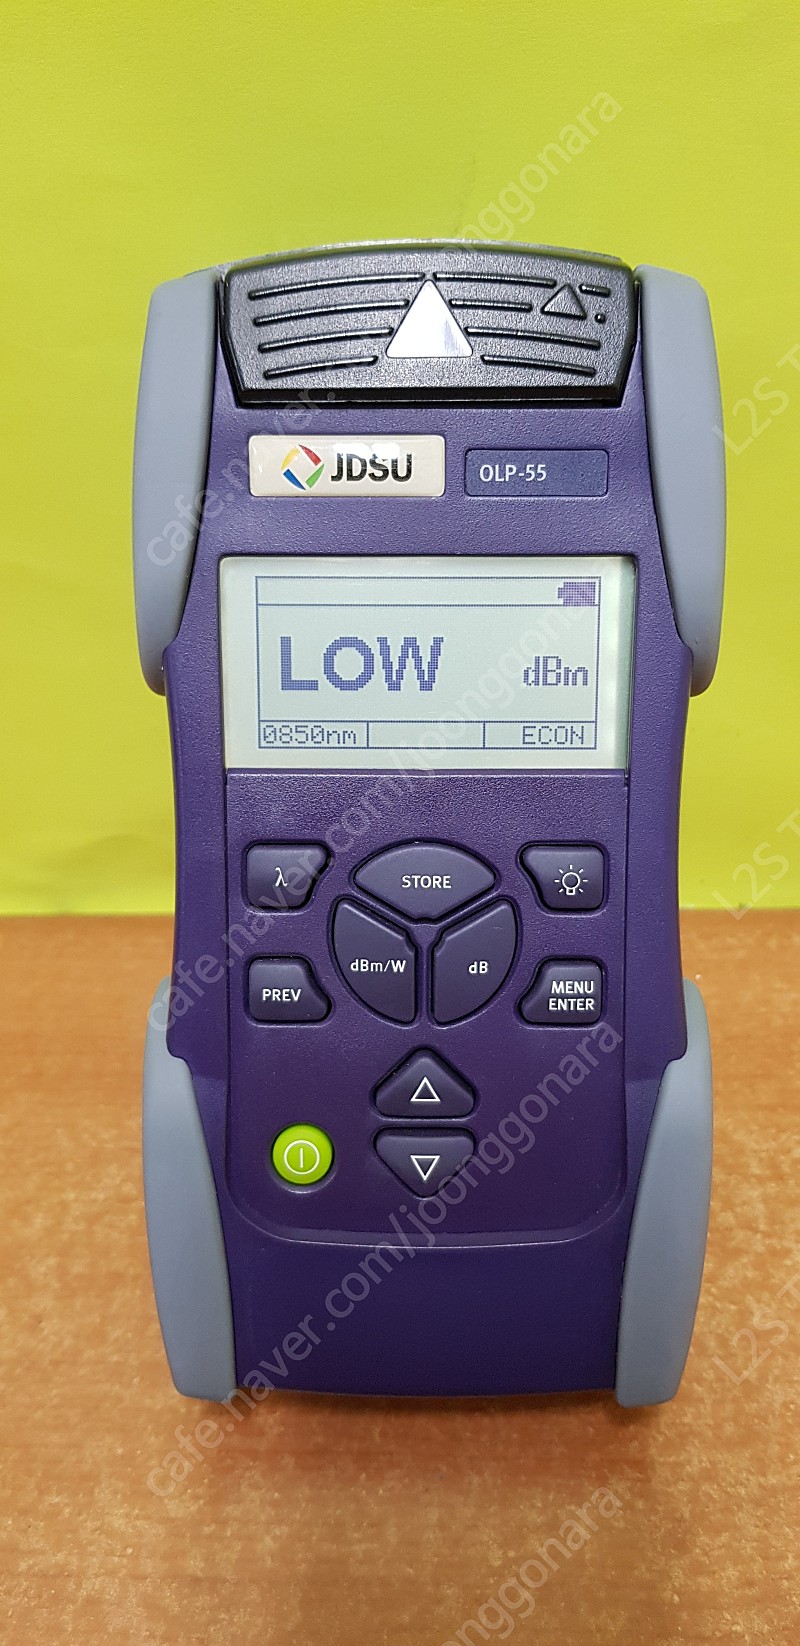 JDSU 광파워메타(Optical Power Meter) OLP-55 판매 합니다.